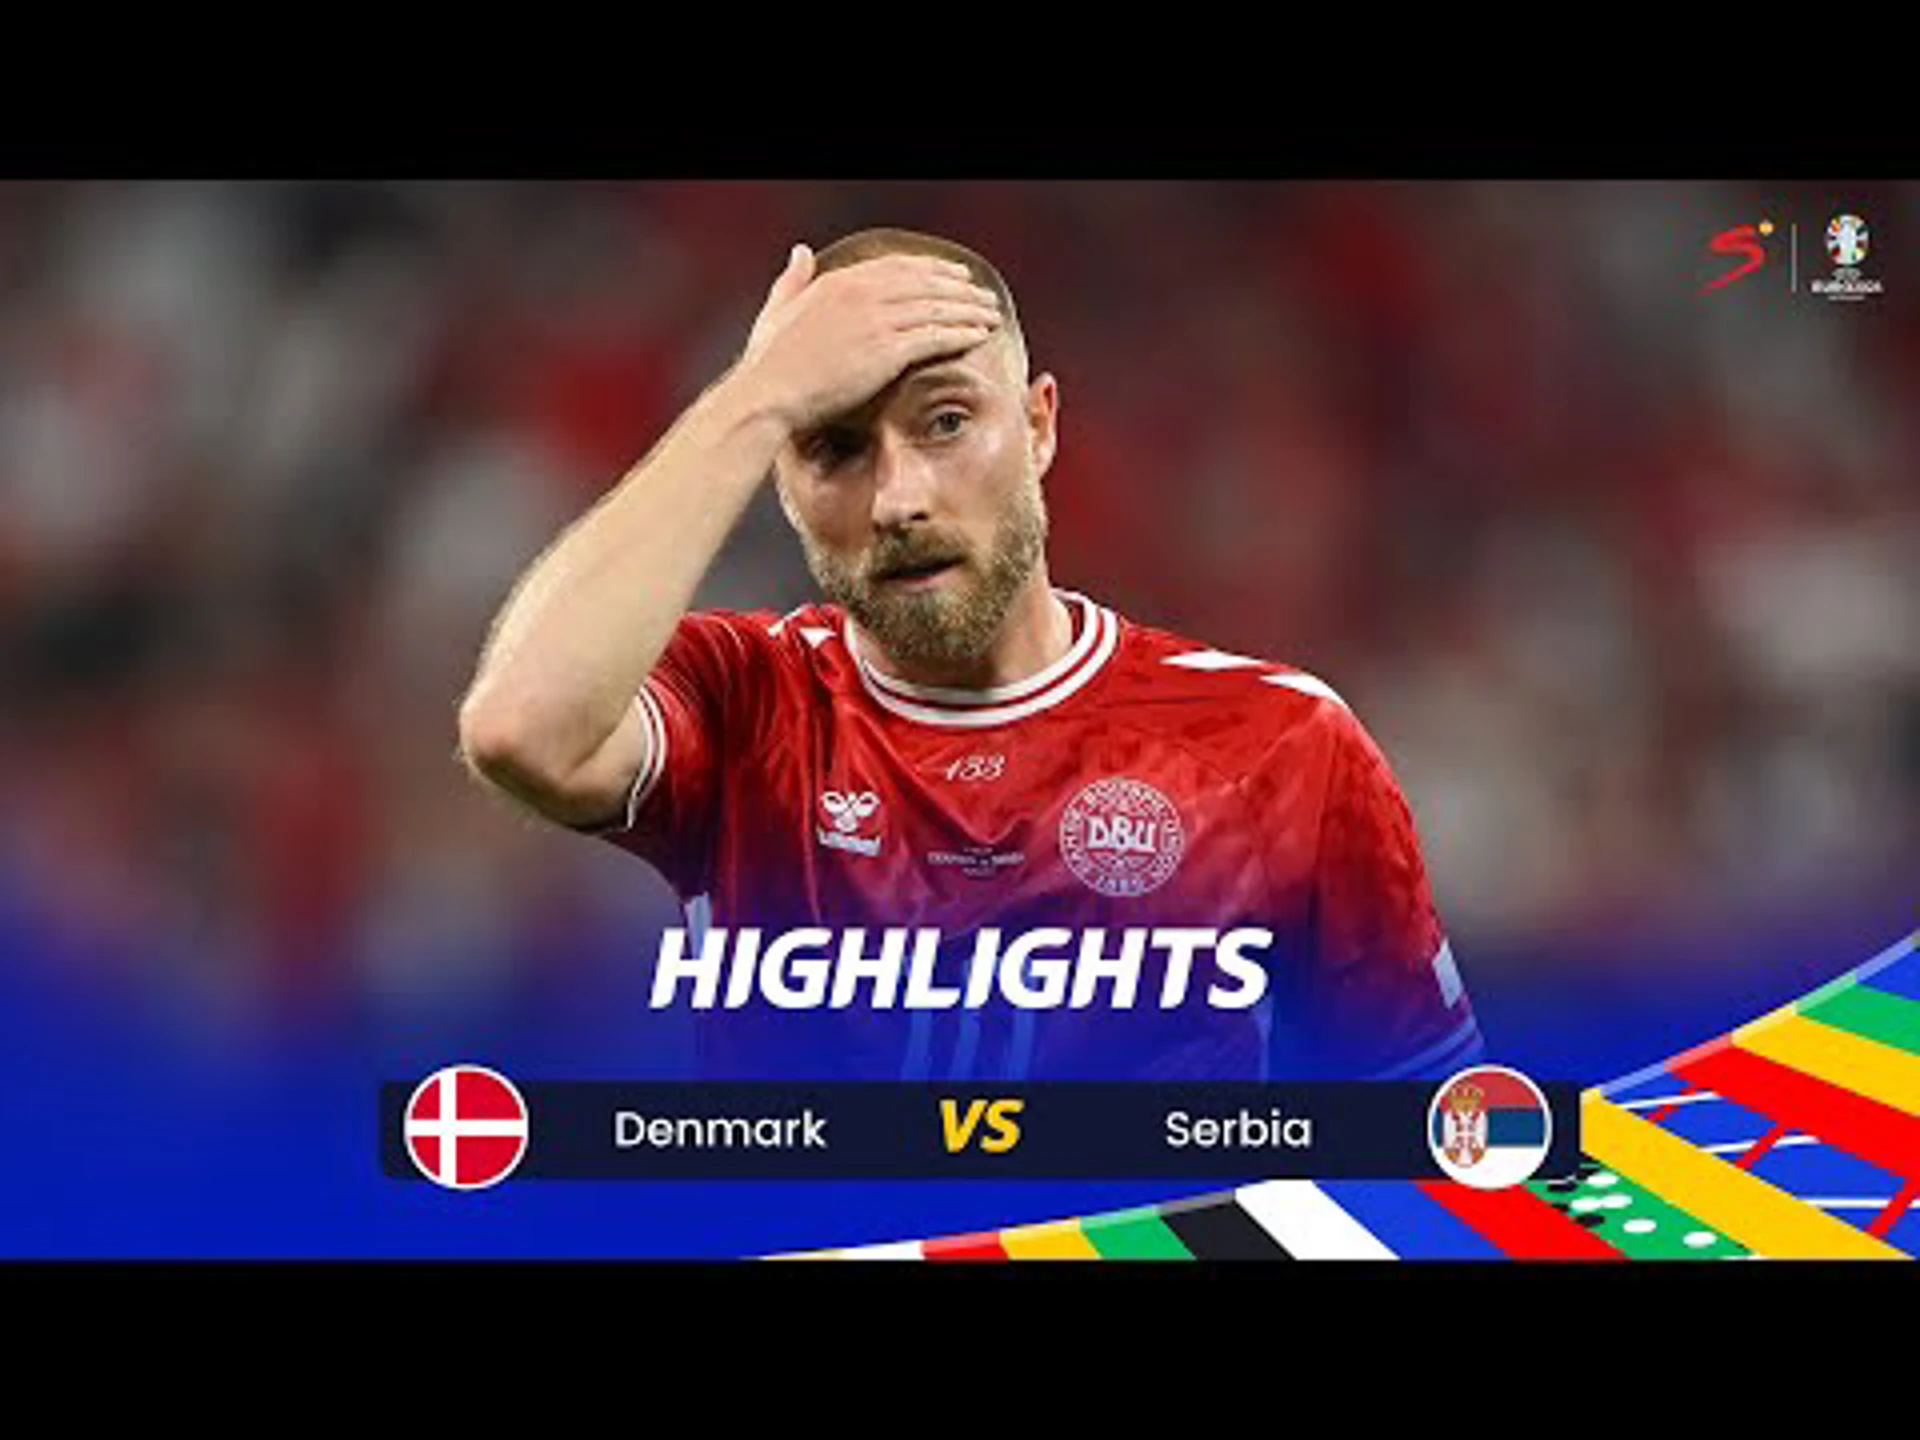 Denmark vs Serbia - Figure 1